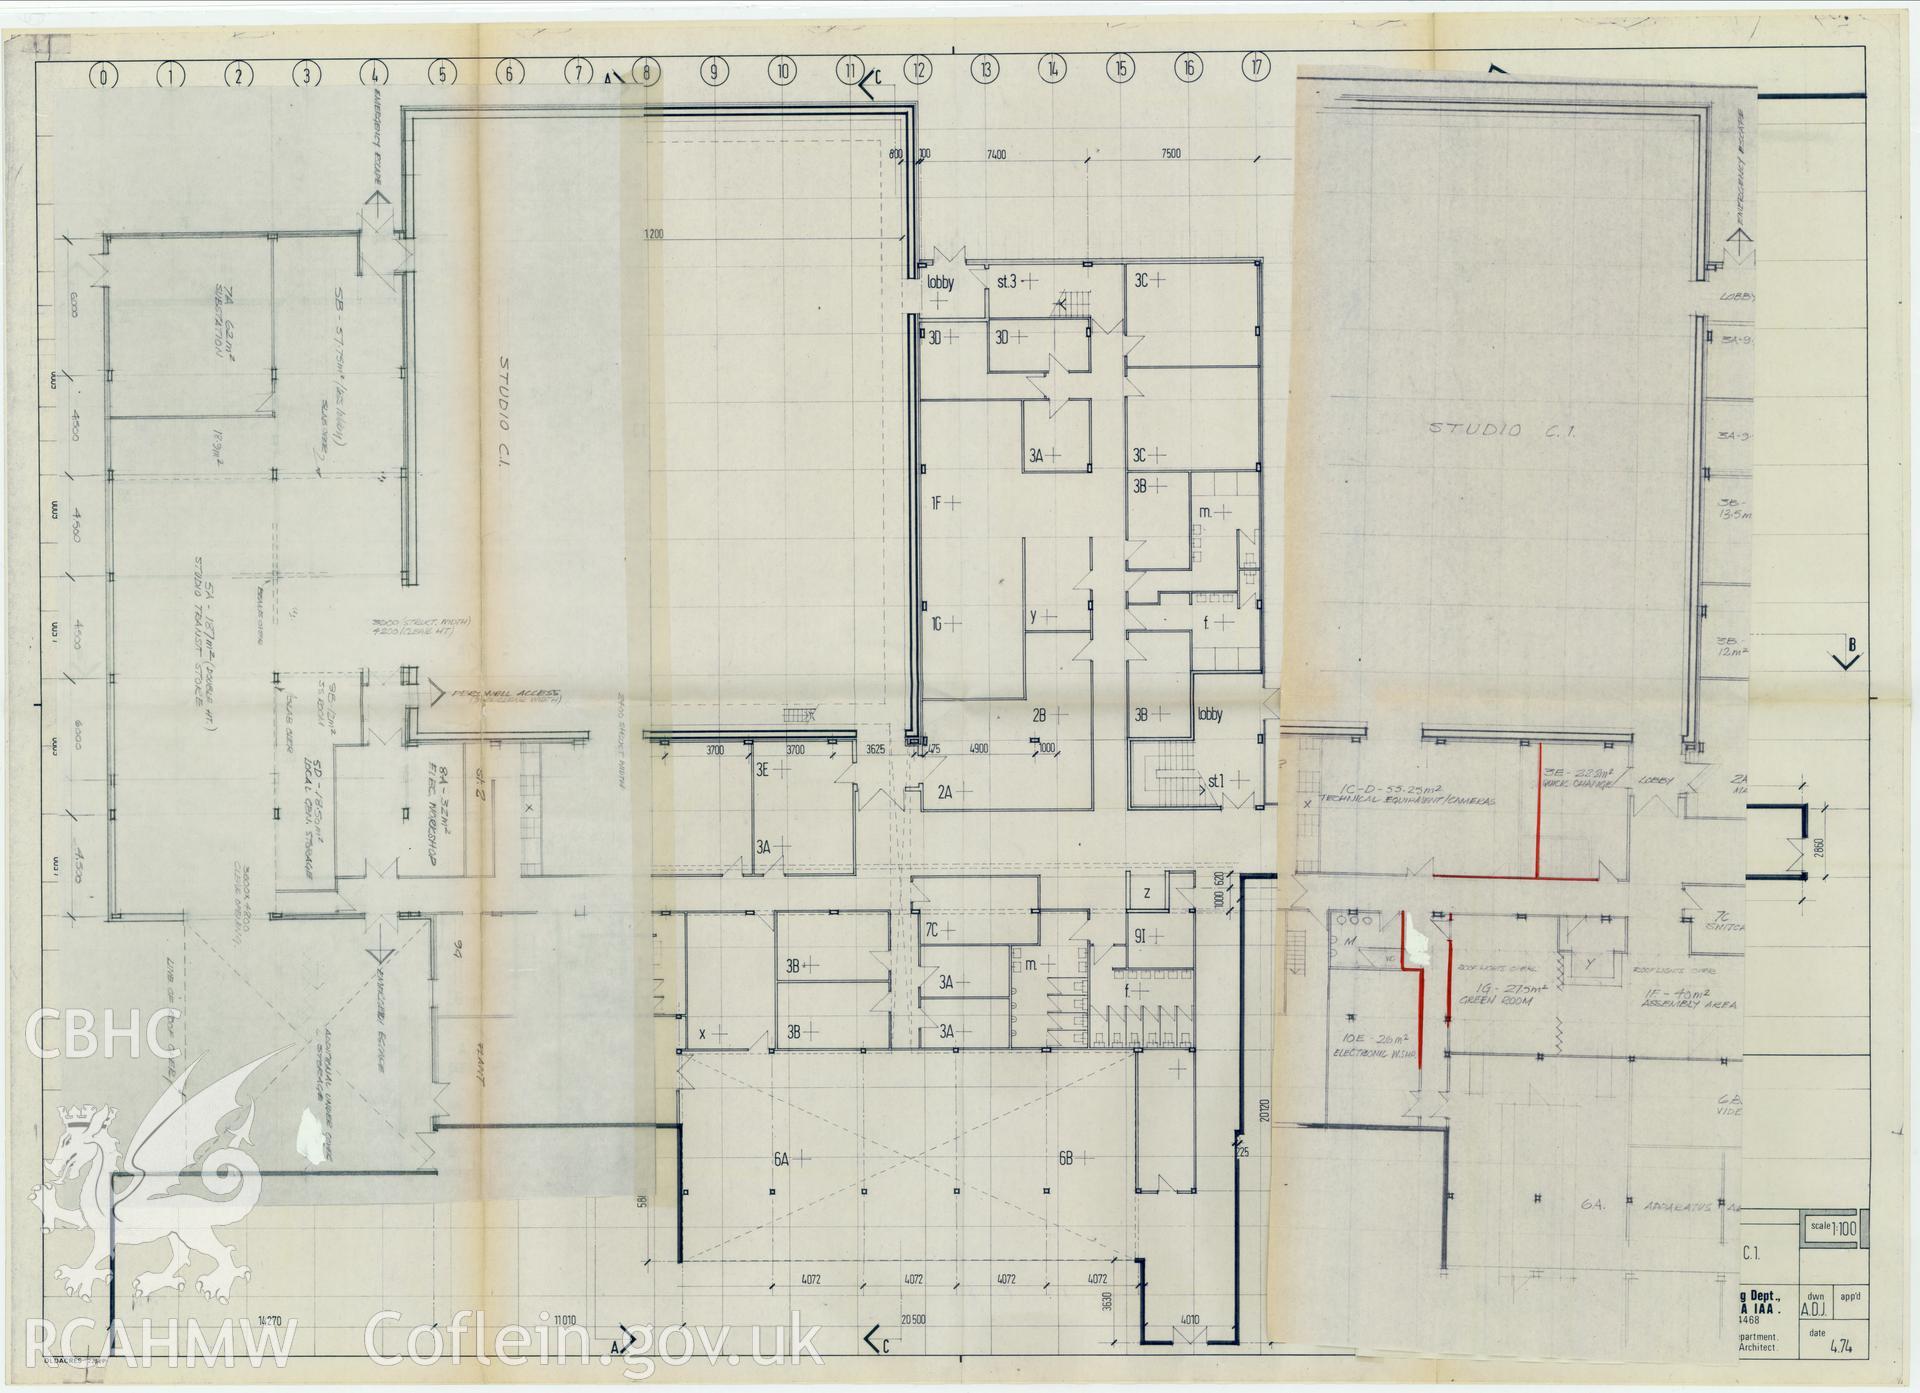 Digitised drawing plan of Llandaff production studio C1 - Colour TV Development, alternative 4 ground floor plan. Drawing no. 411f amended. May 1974.